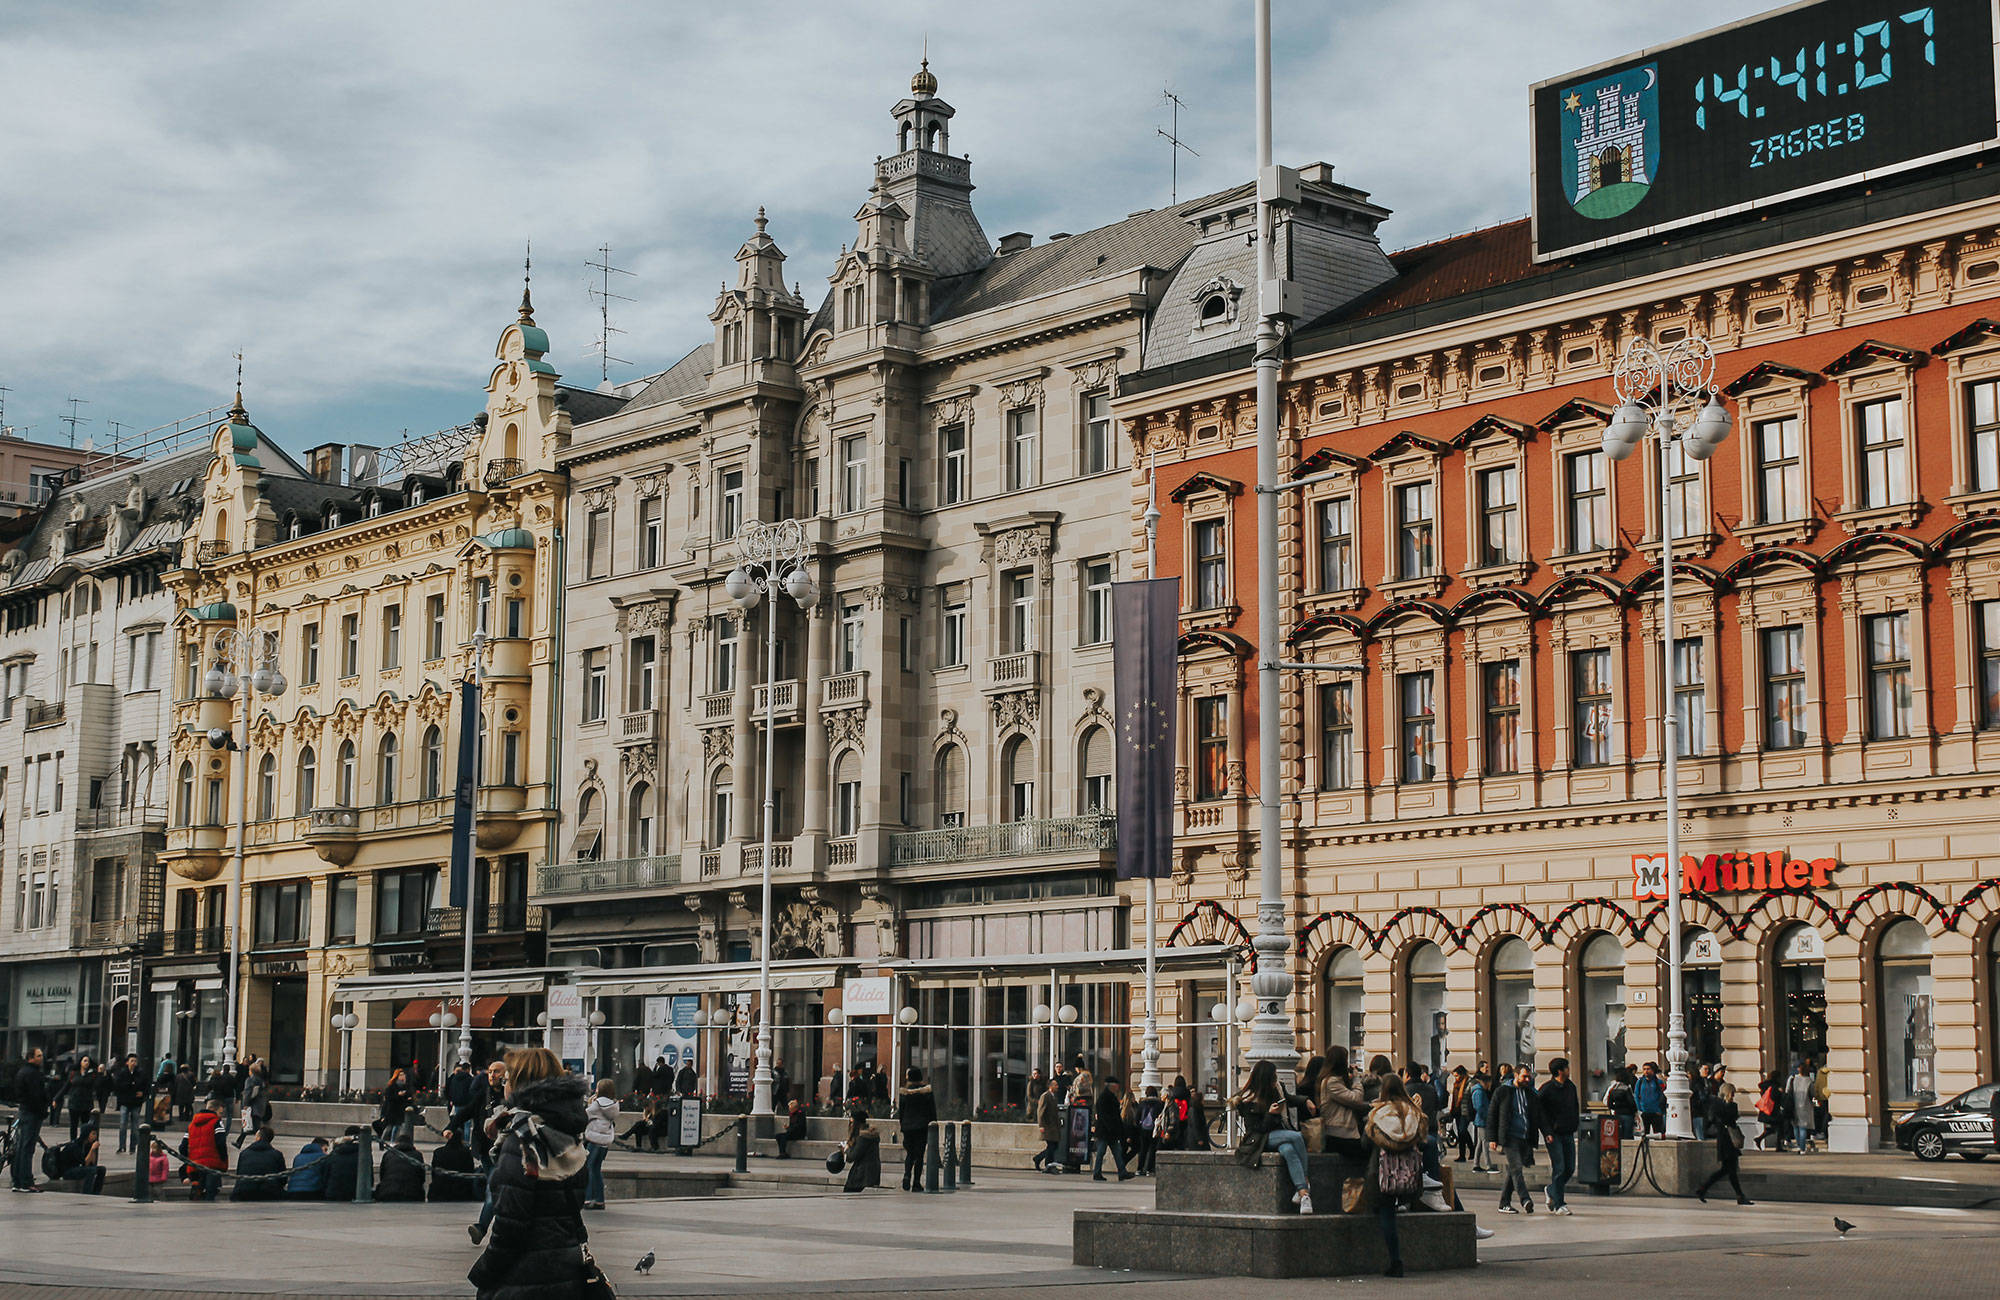 Plein in de stad | Reizen naar Zagreb | KILROY